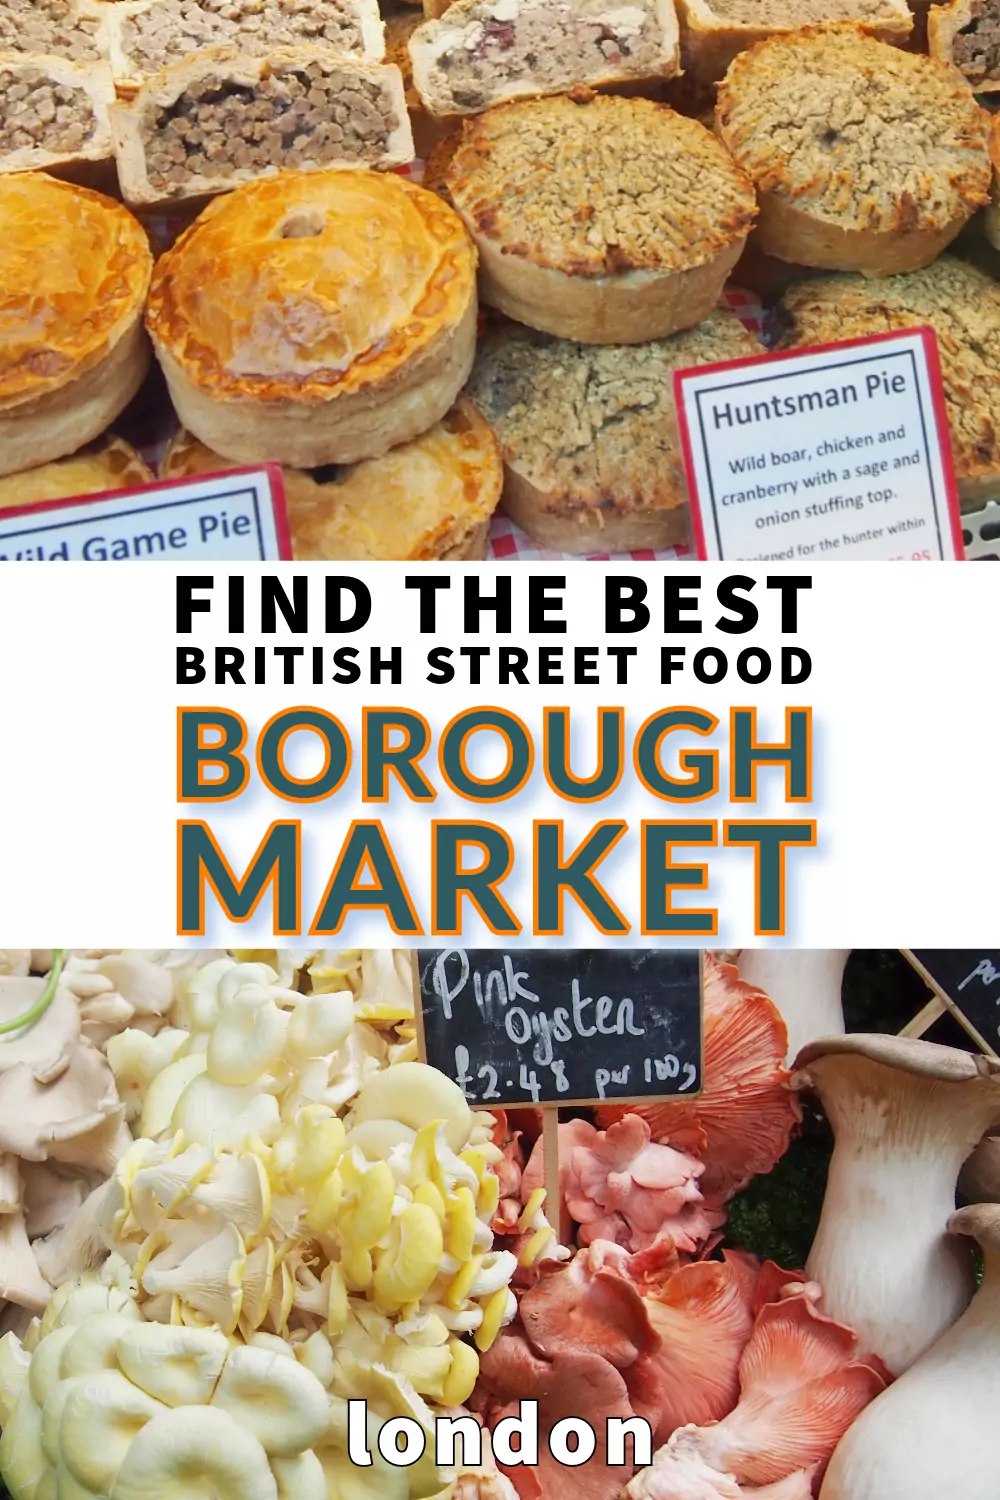 Borough Market food photos